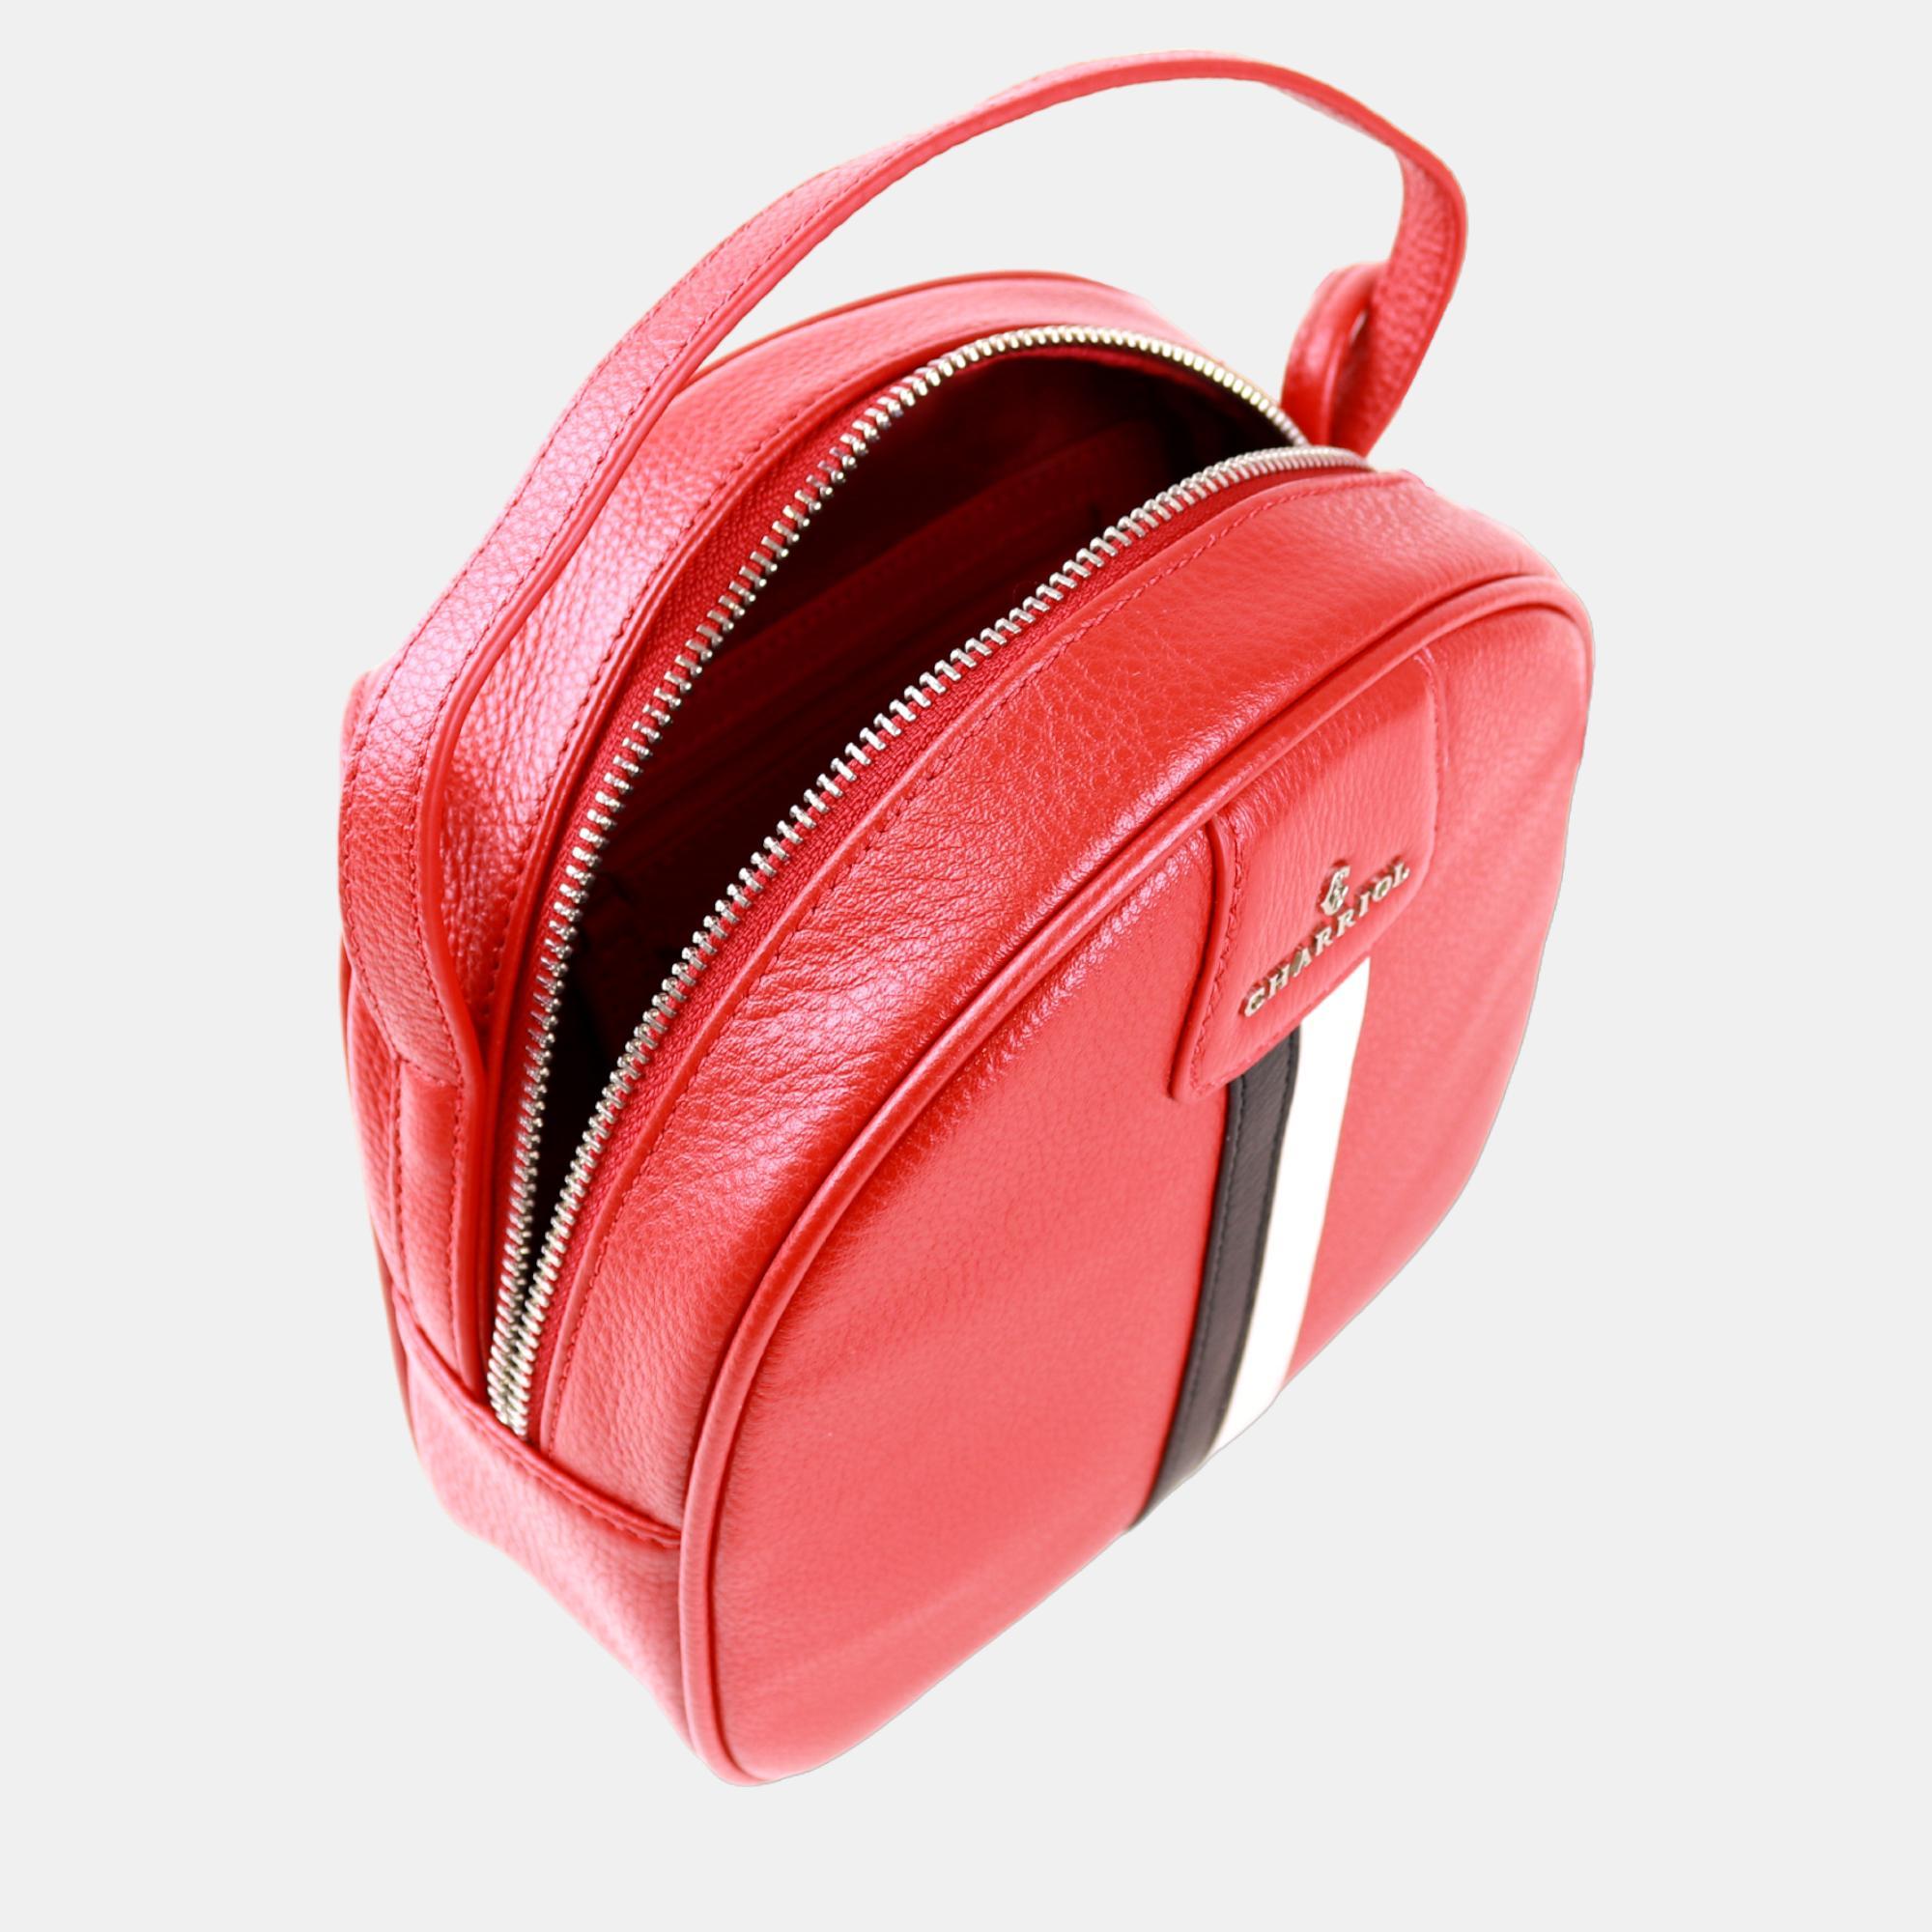 Charriol Red Leather Conic Handbag